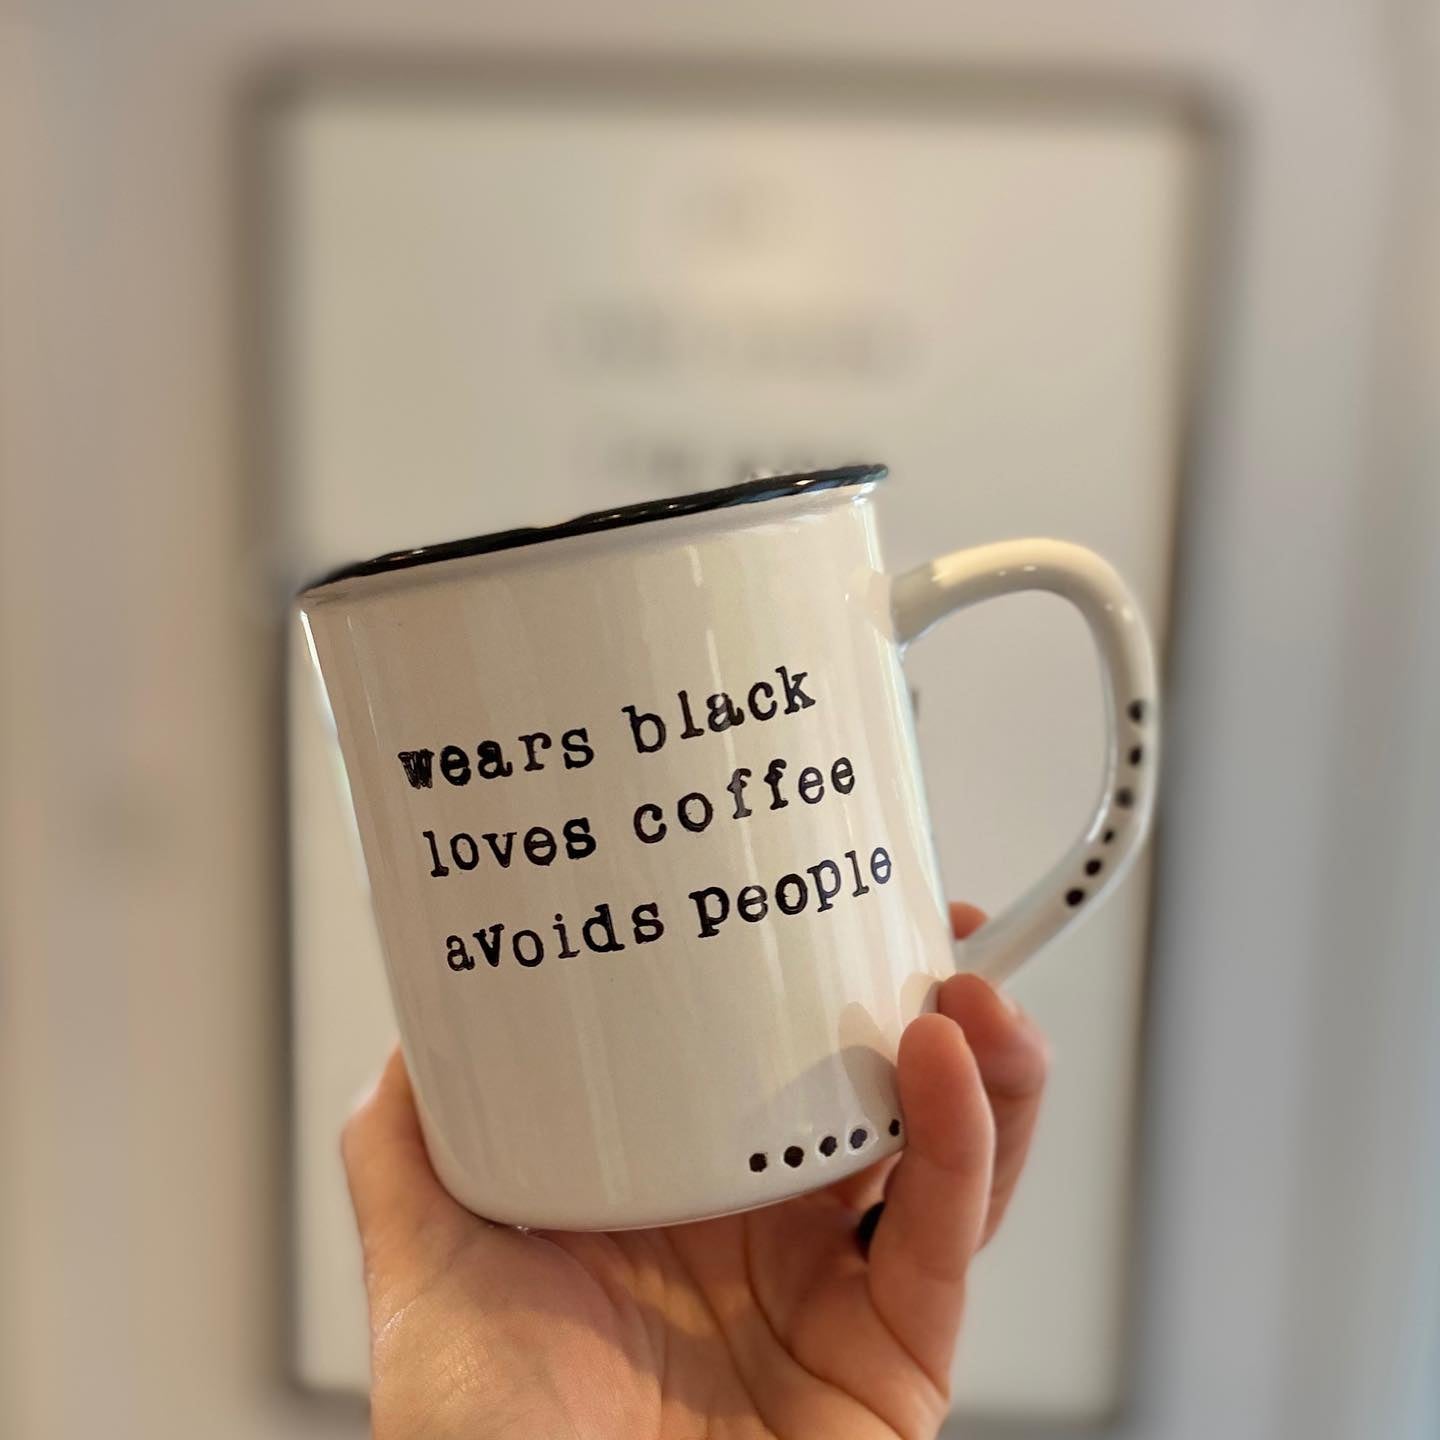 Wears black loves coffee avoids people